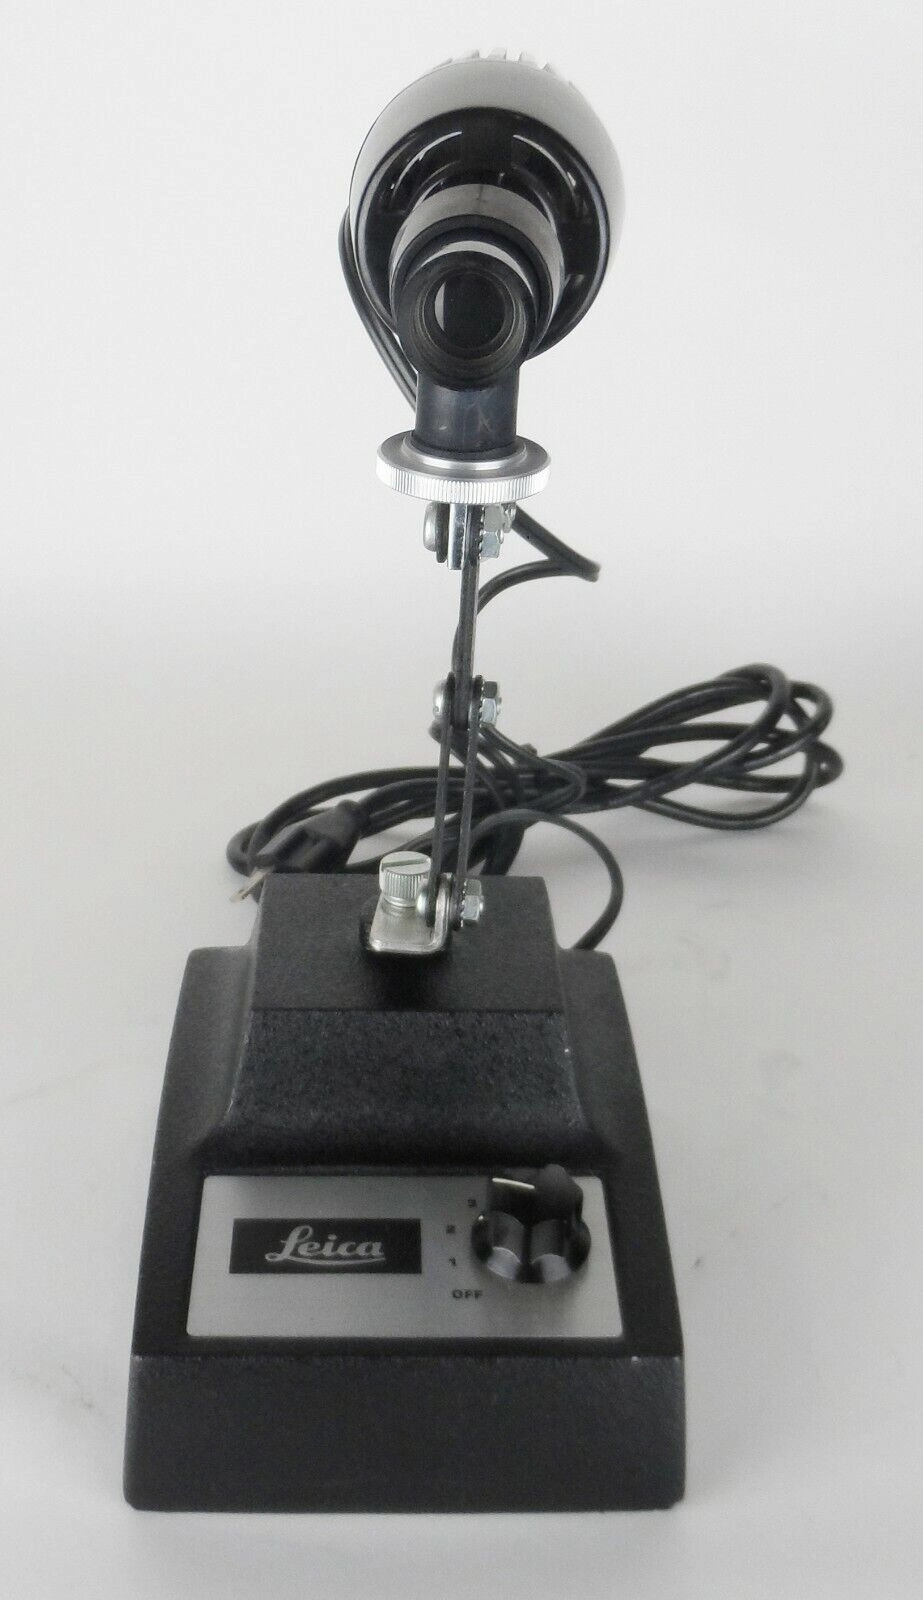 Leica Microscope Illuminator Transformer 31-35-28